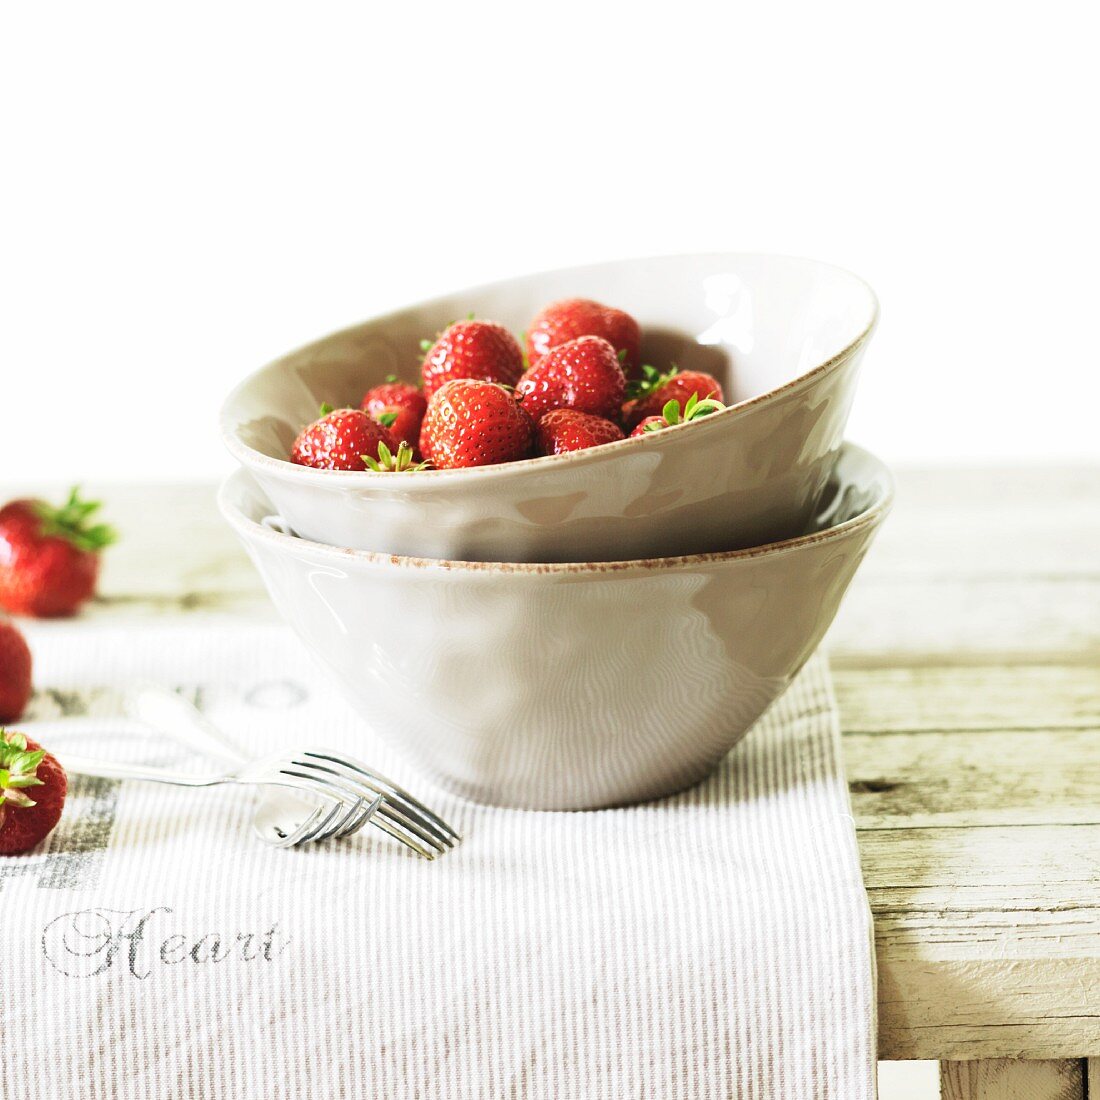 Fresh strawberries in a ceramic dish